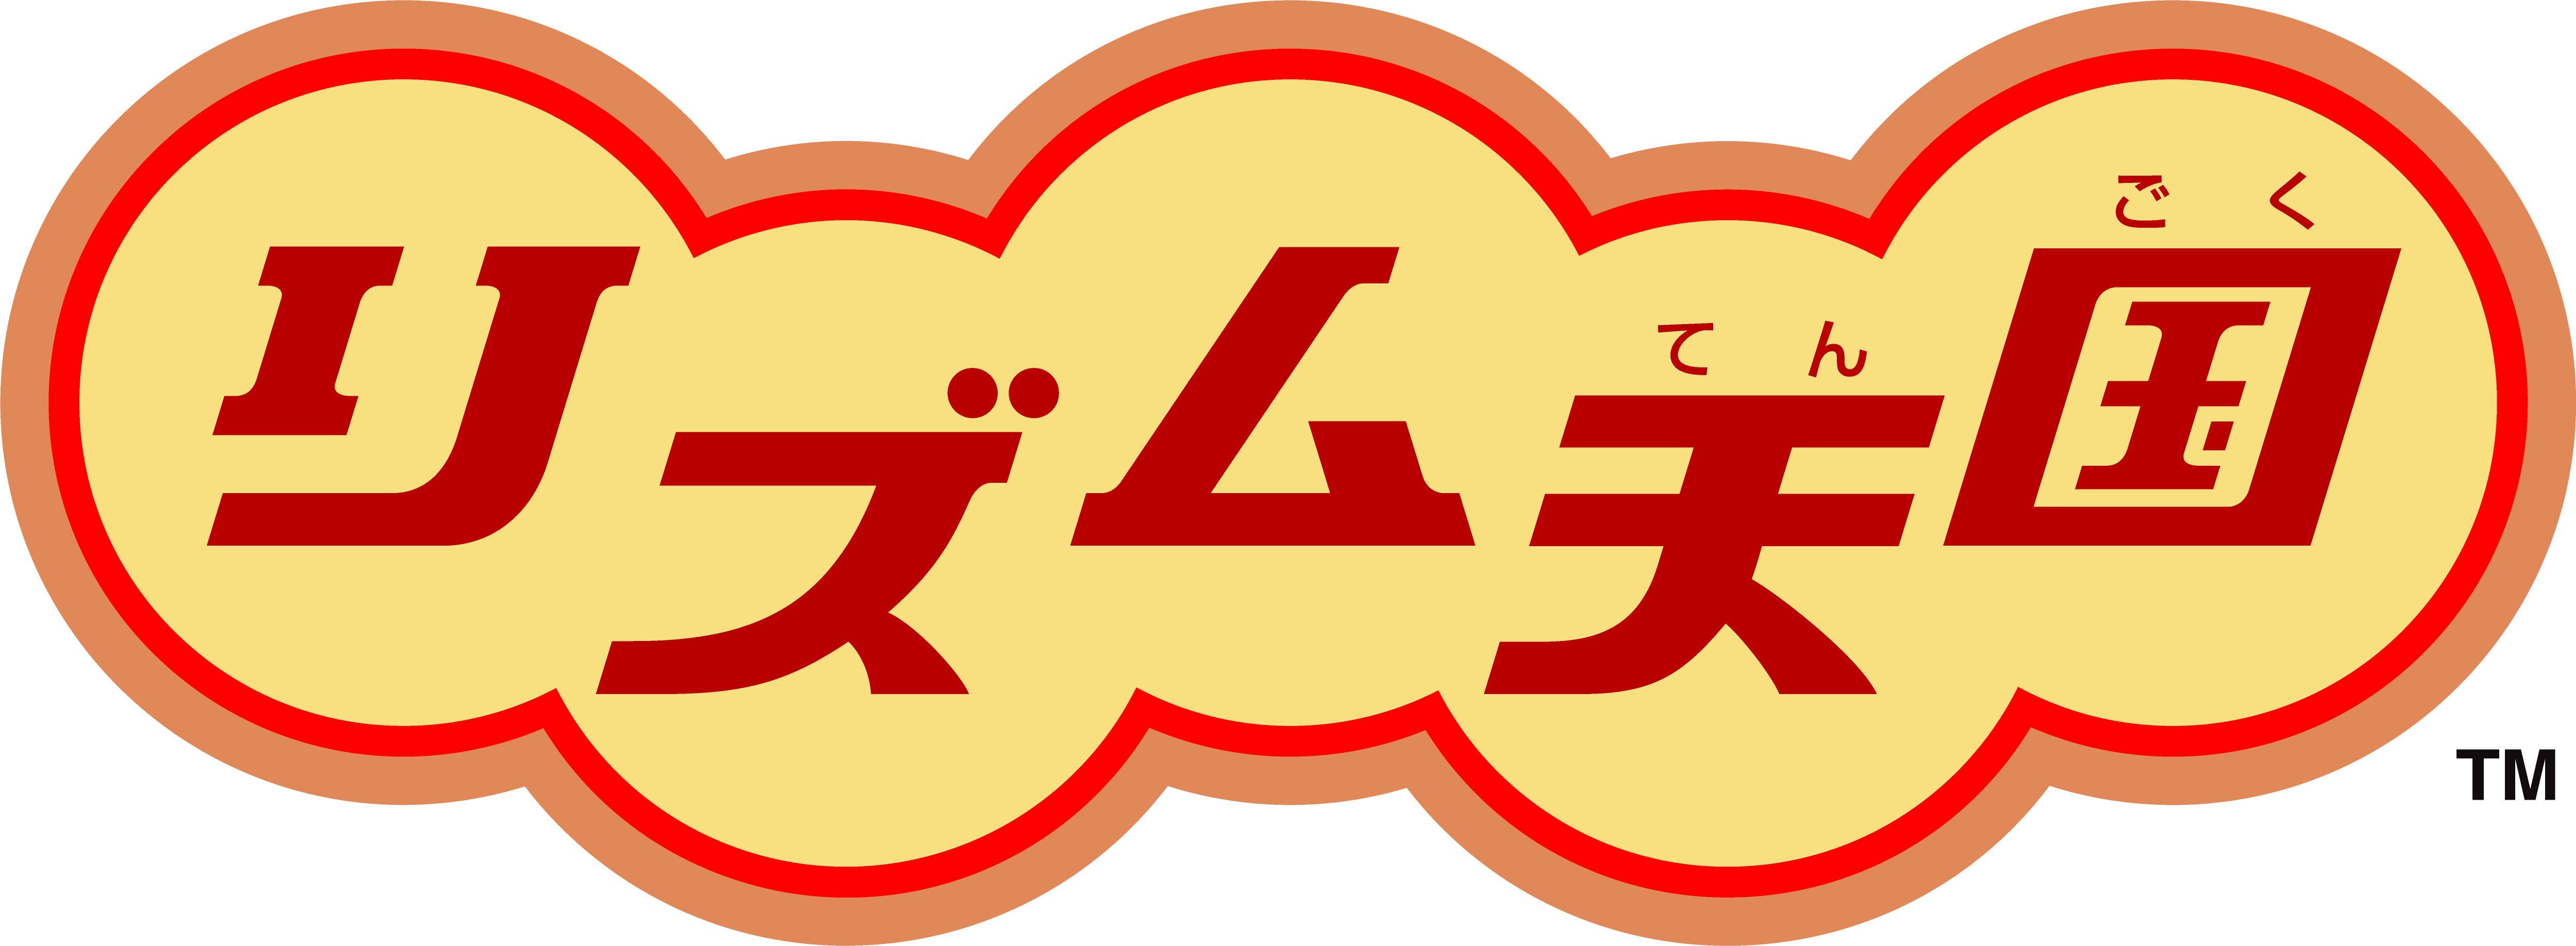 File:Rhythm Tengoku logo.svg - Wikimedia Commons